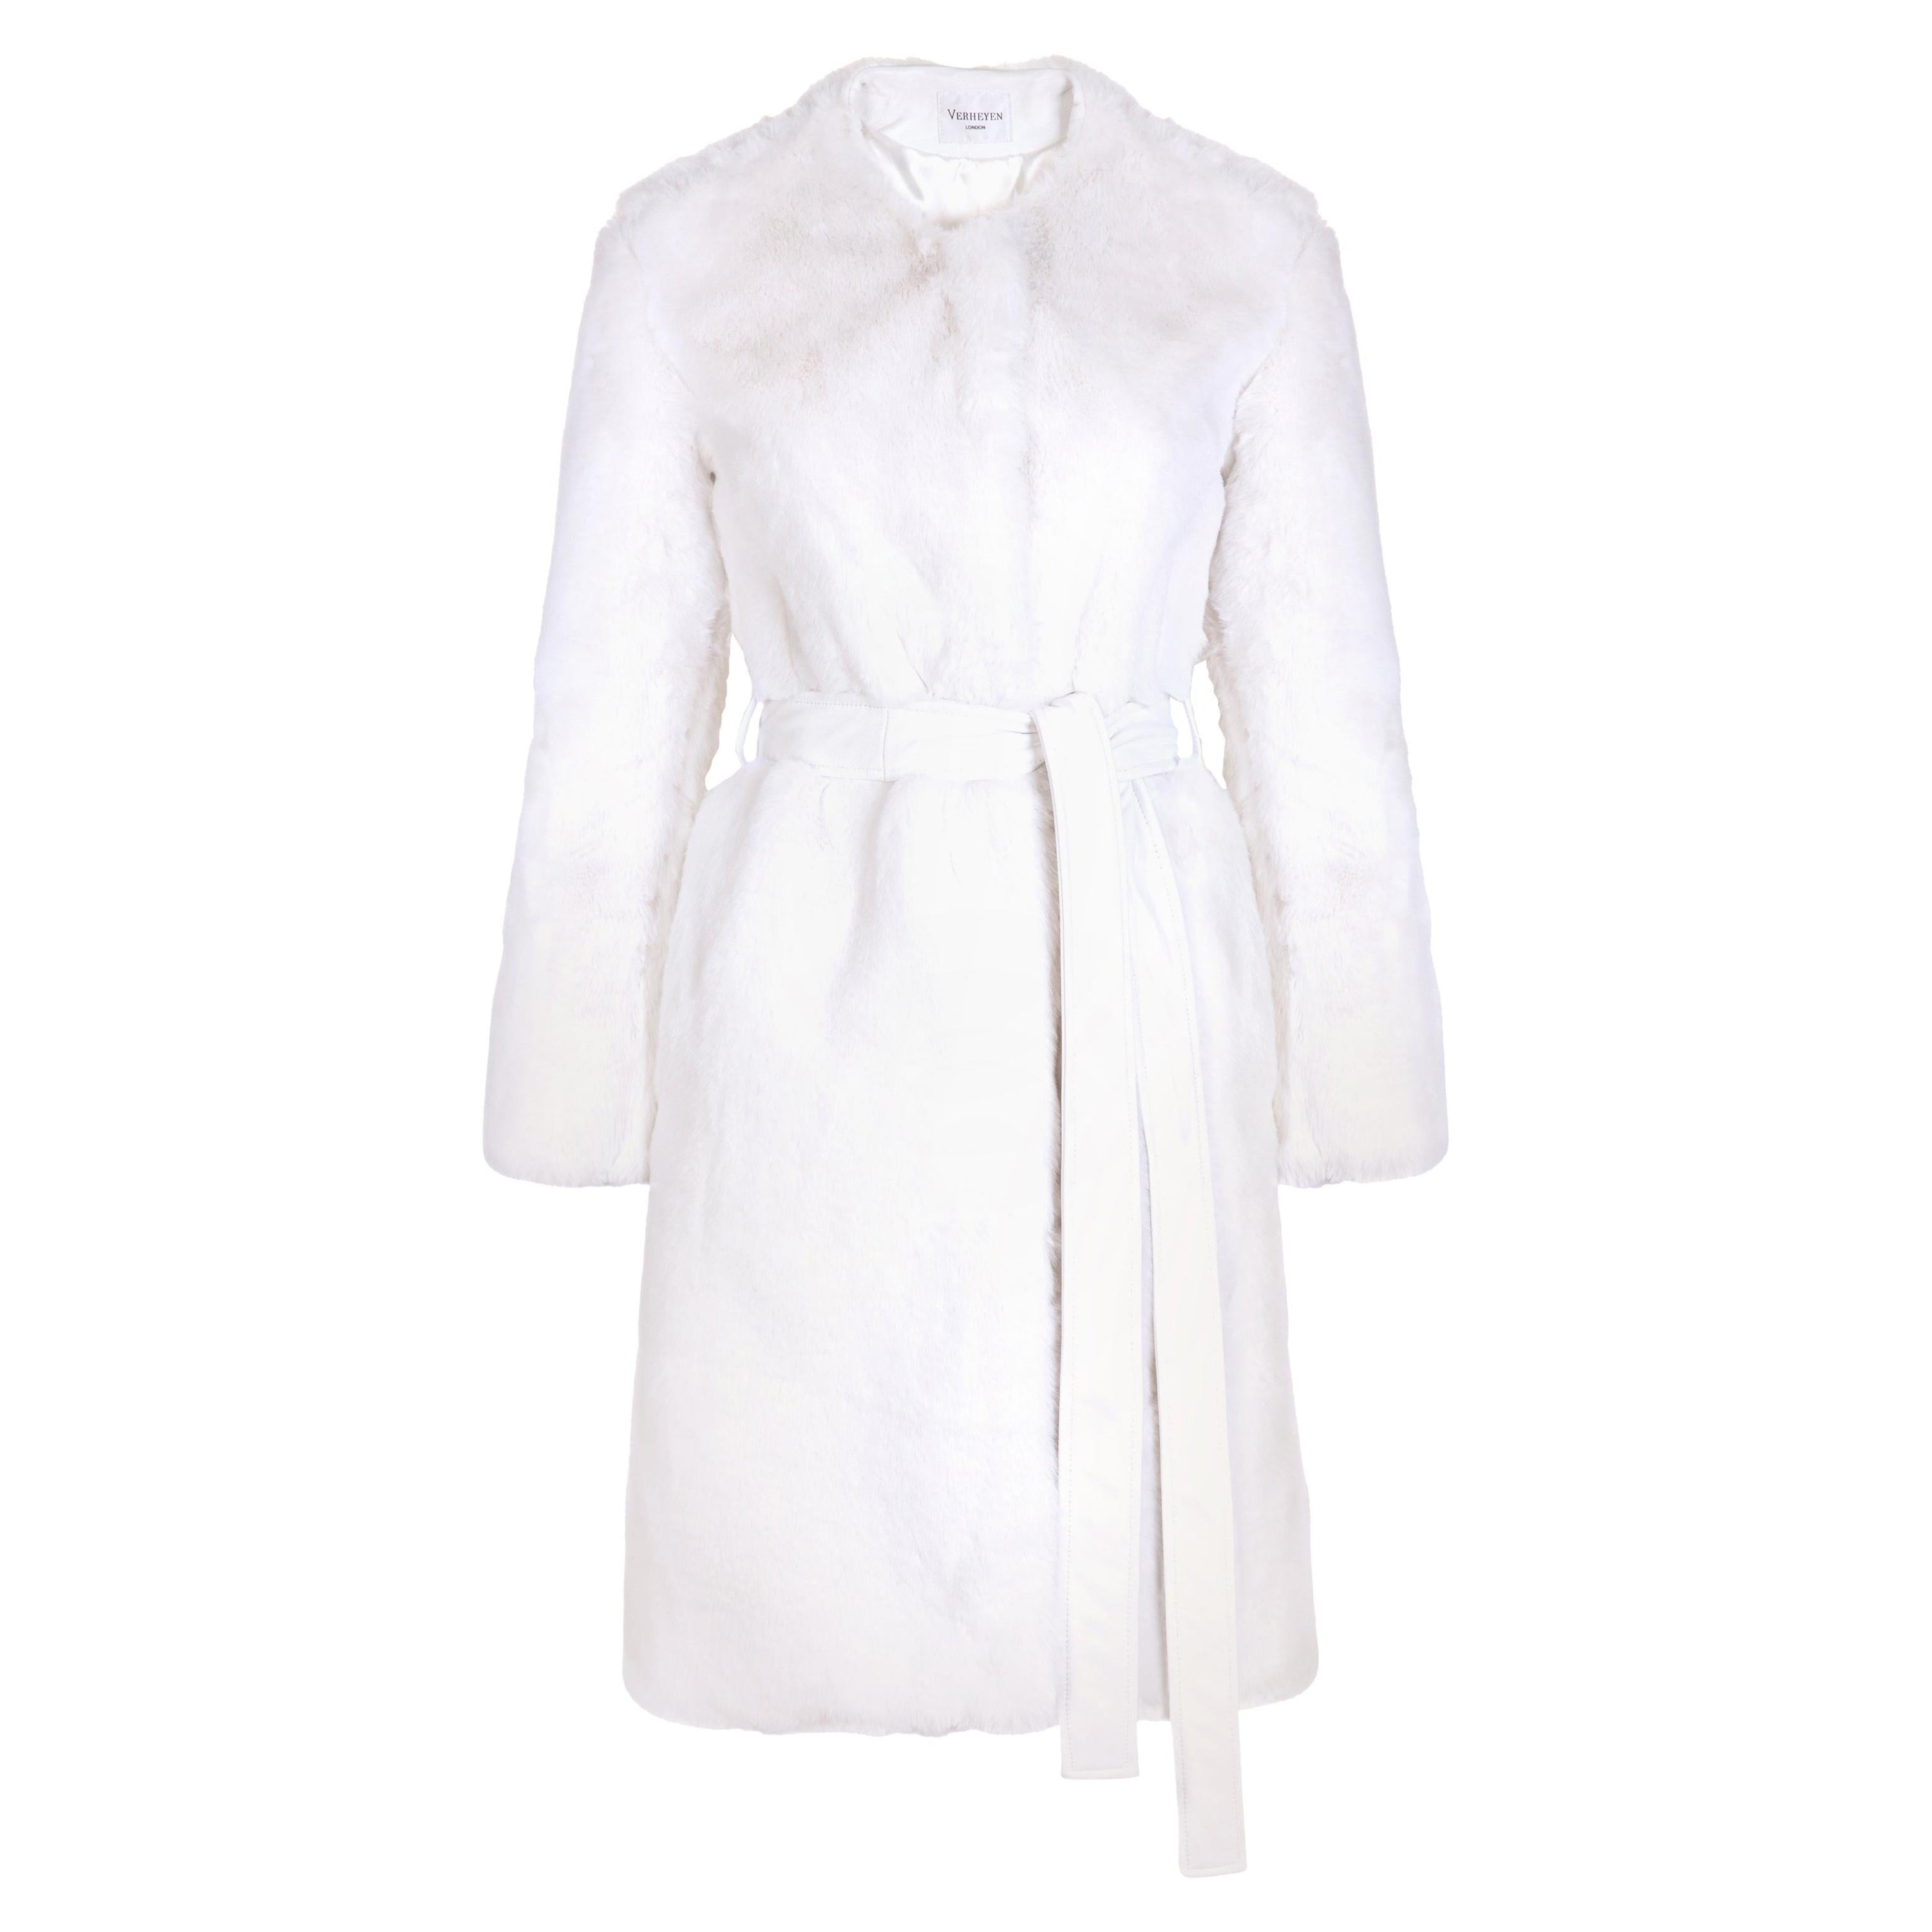 Verheyen London Serena  Collarless Faux Fur Coat in White - Size uk 6 For Sale